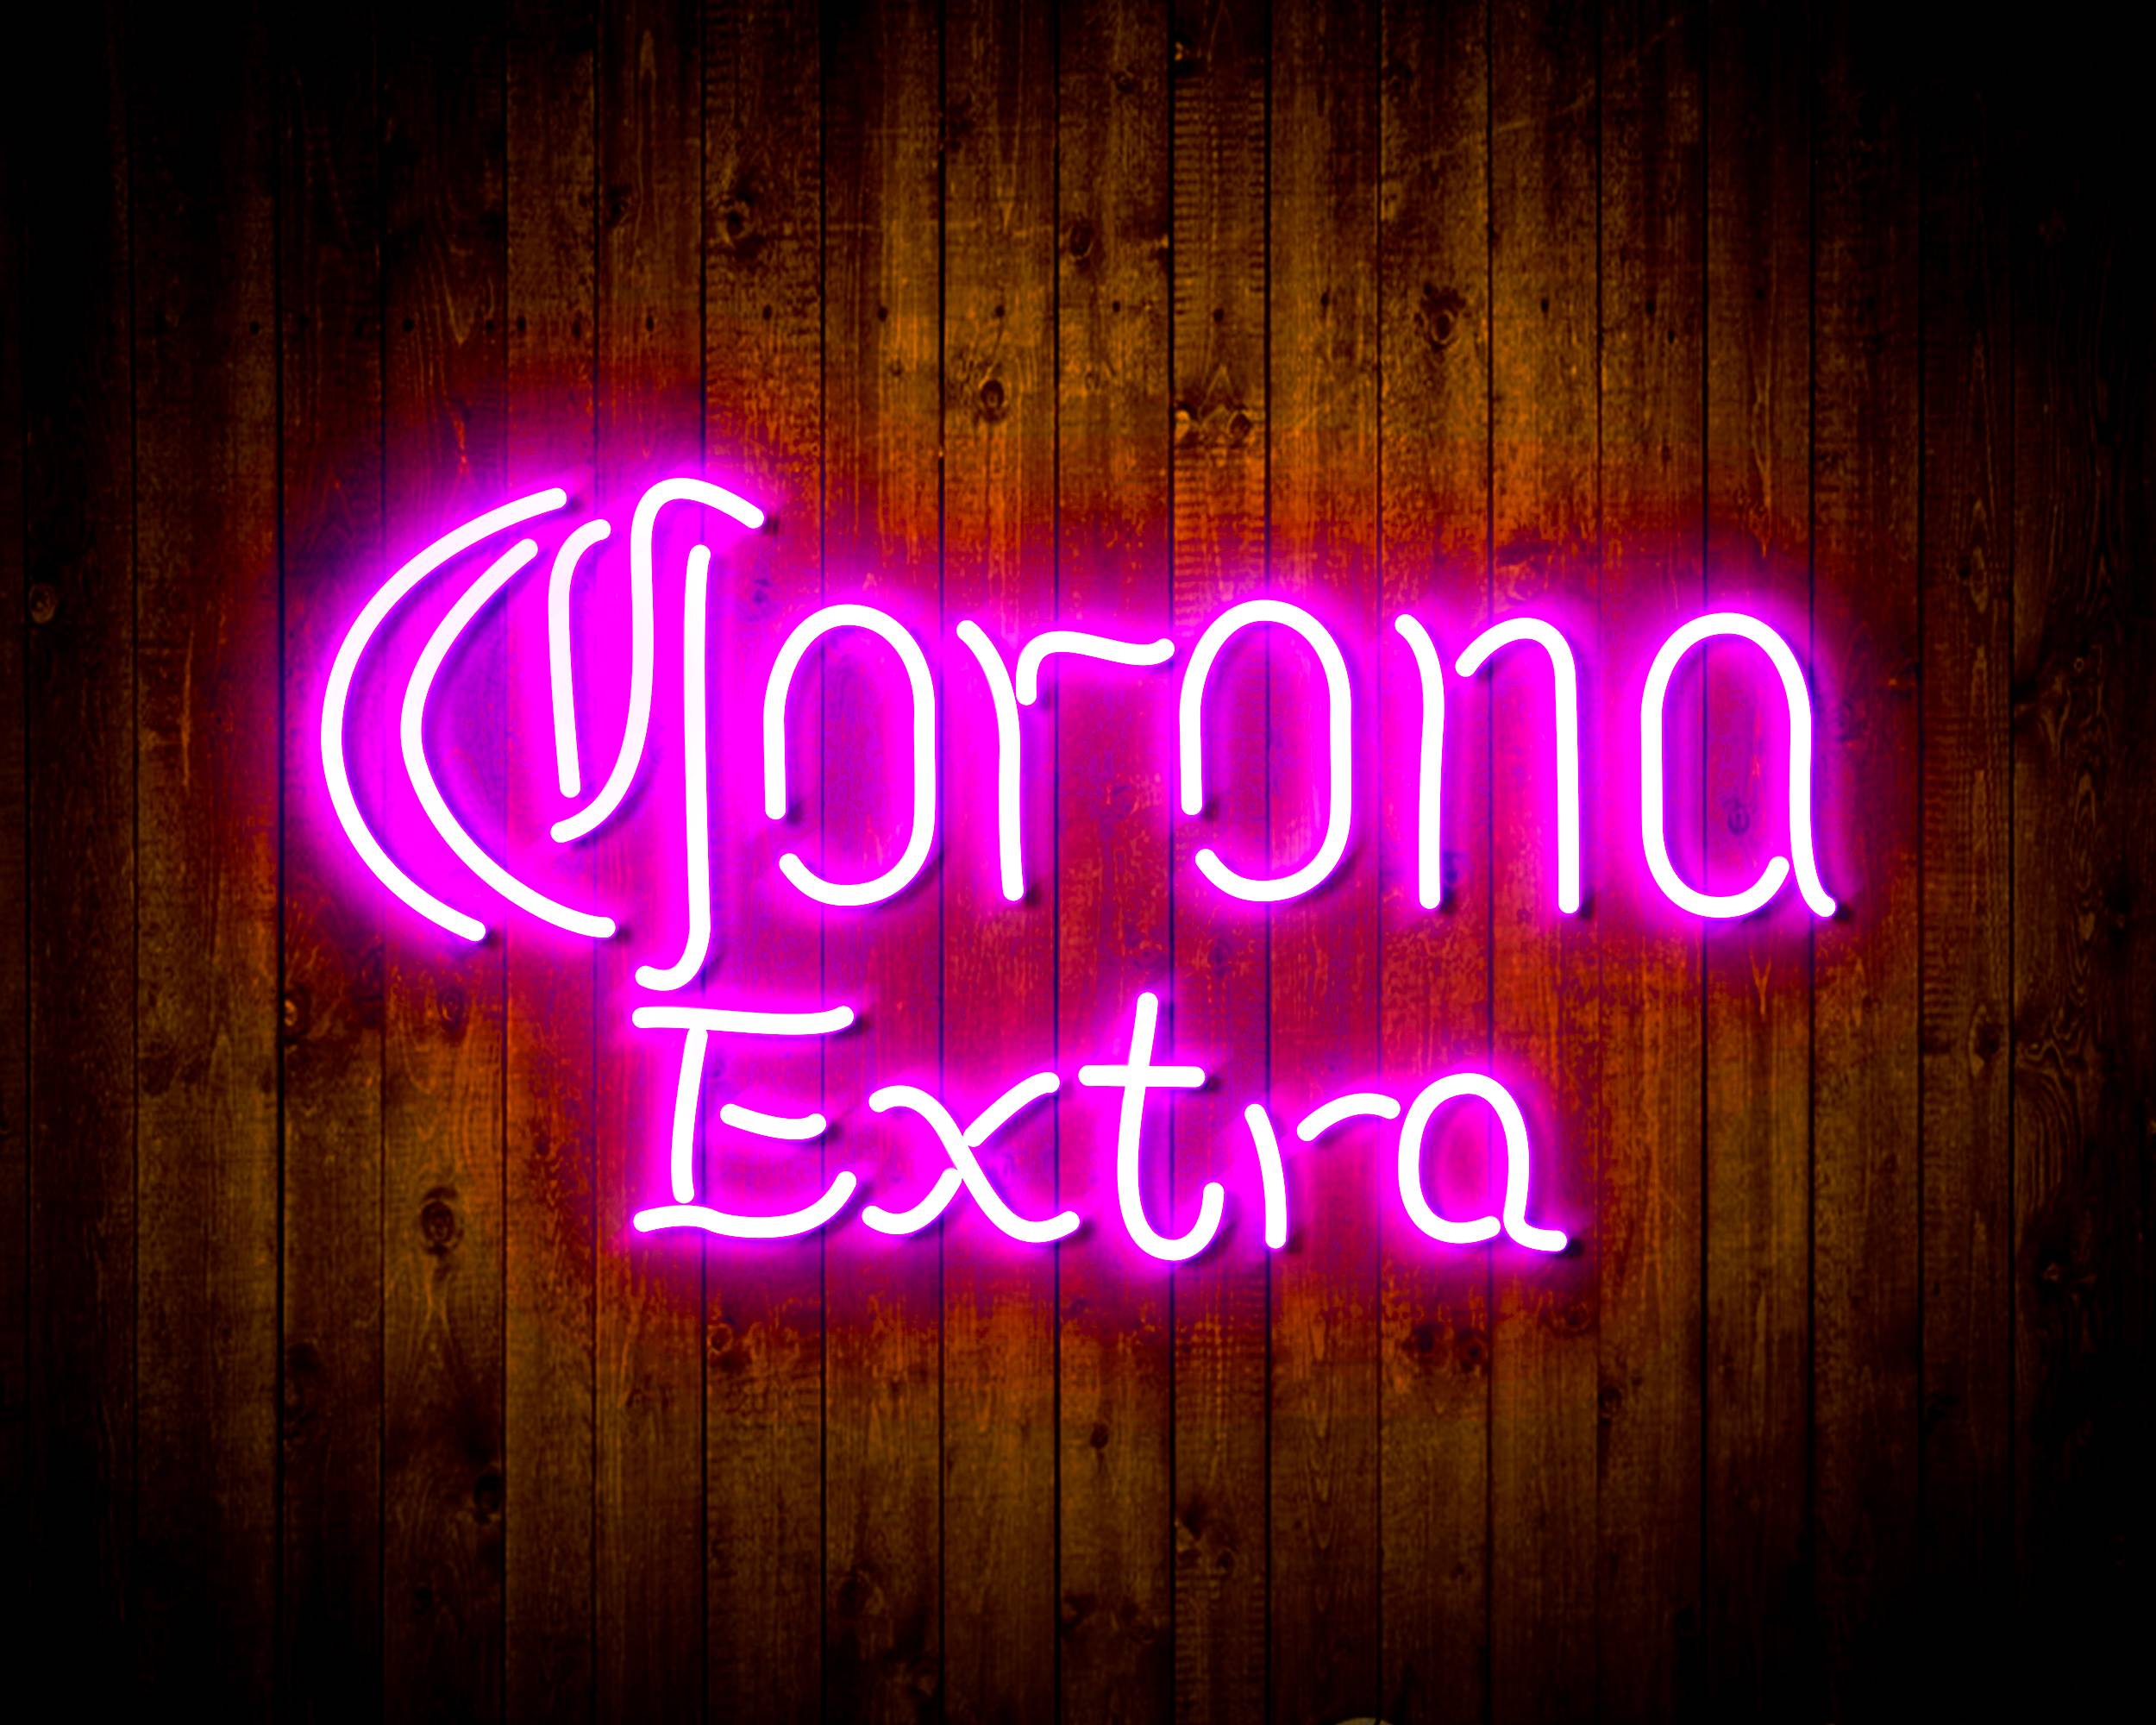 Corona Extra Bar Handmade Neon Flex LED Sign